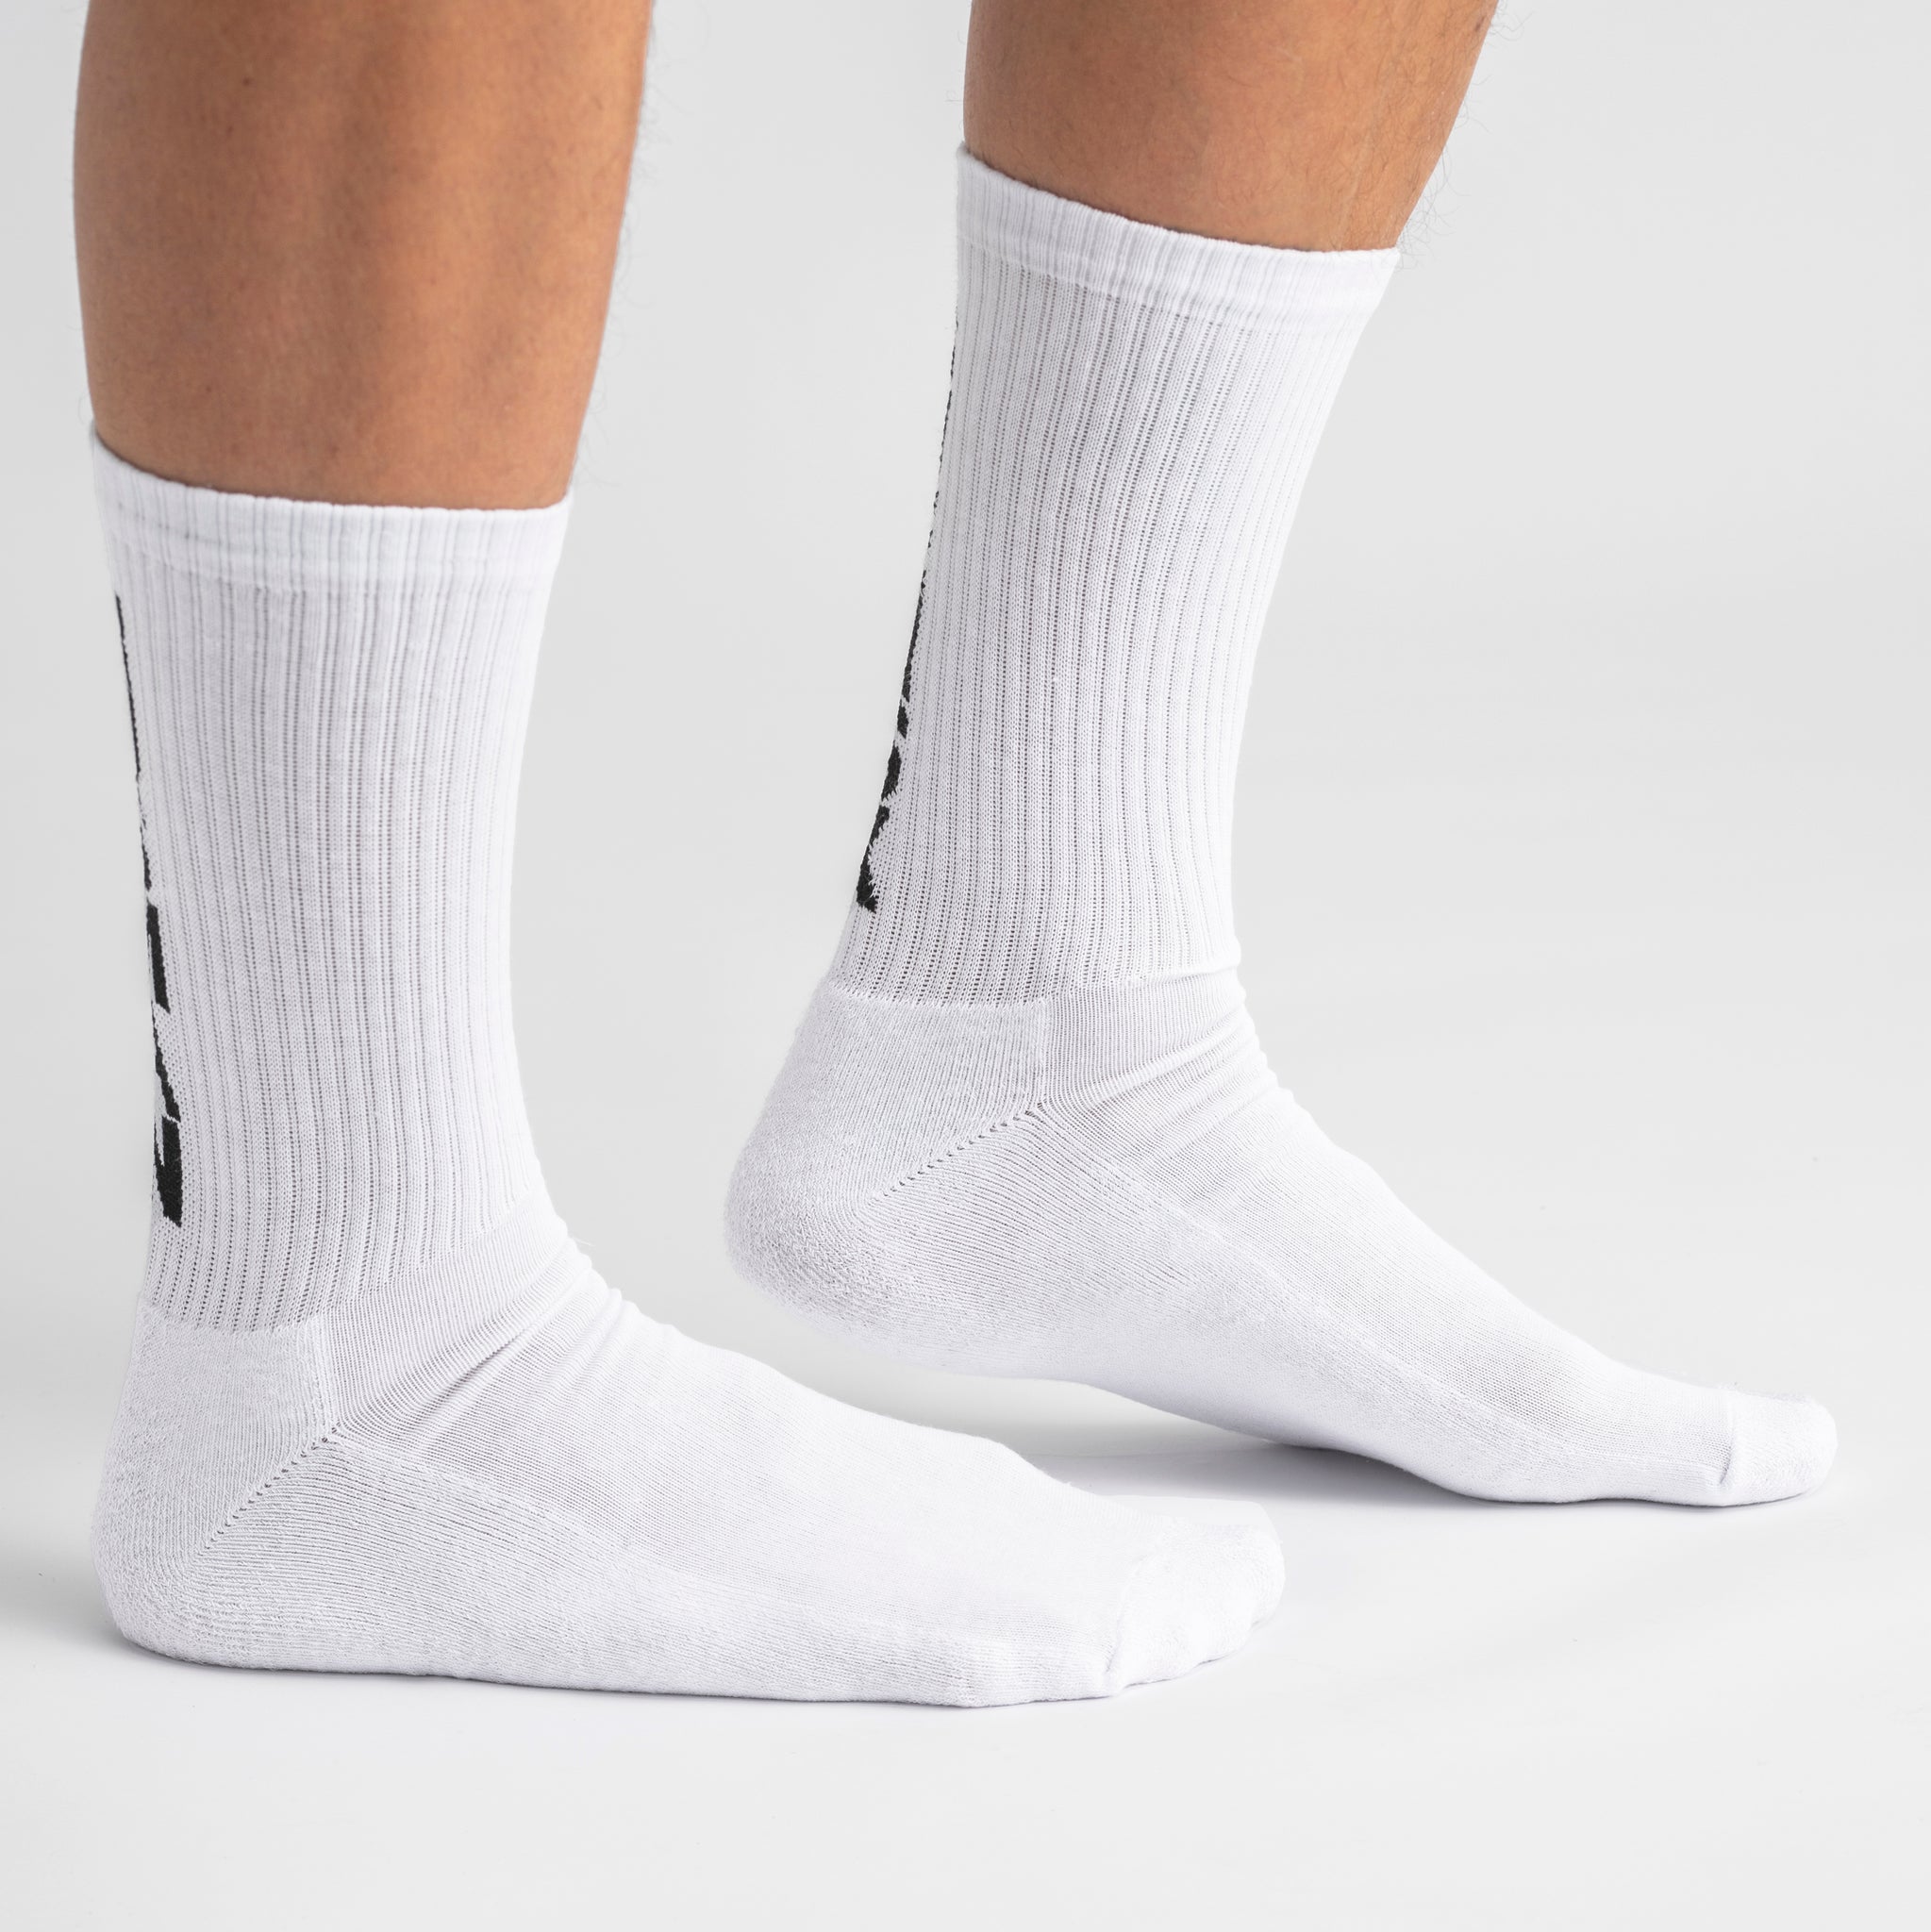 Tennis socks - Swedish Husman